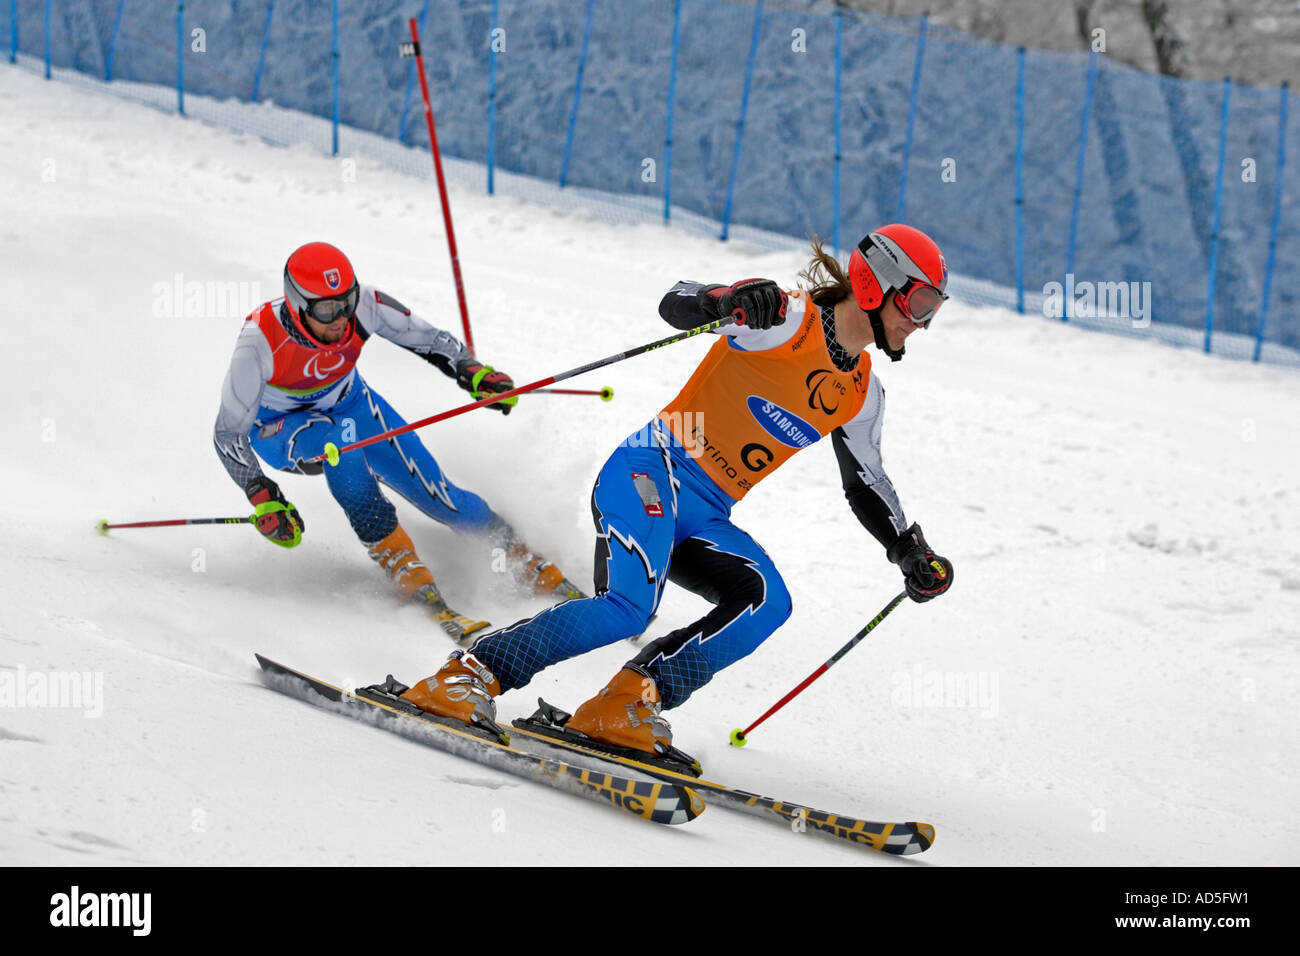 Daniel Cintula der Slowakei in der Konkurrenz Herren Alpin Ski Slalom blinde  und Sehbehinderte Stockfotografie - Alamy